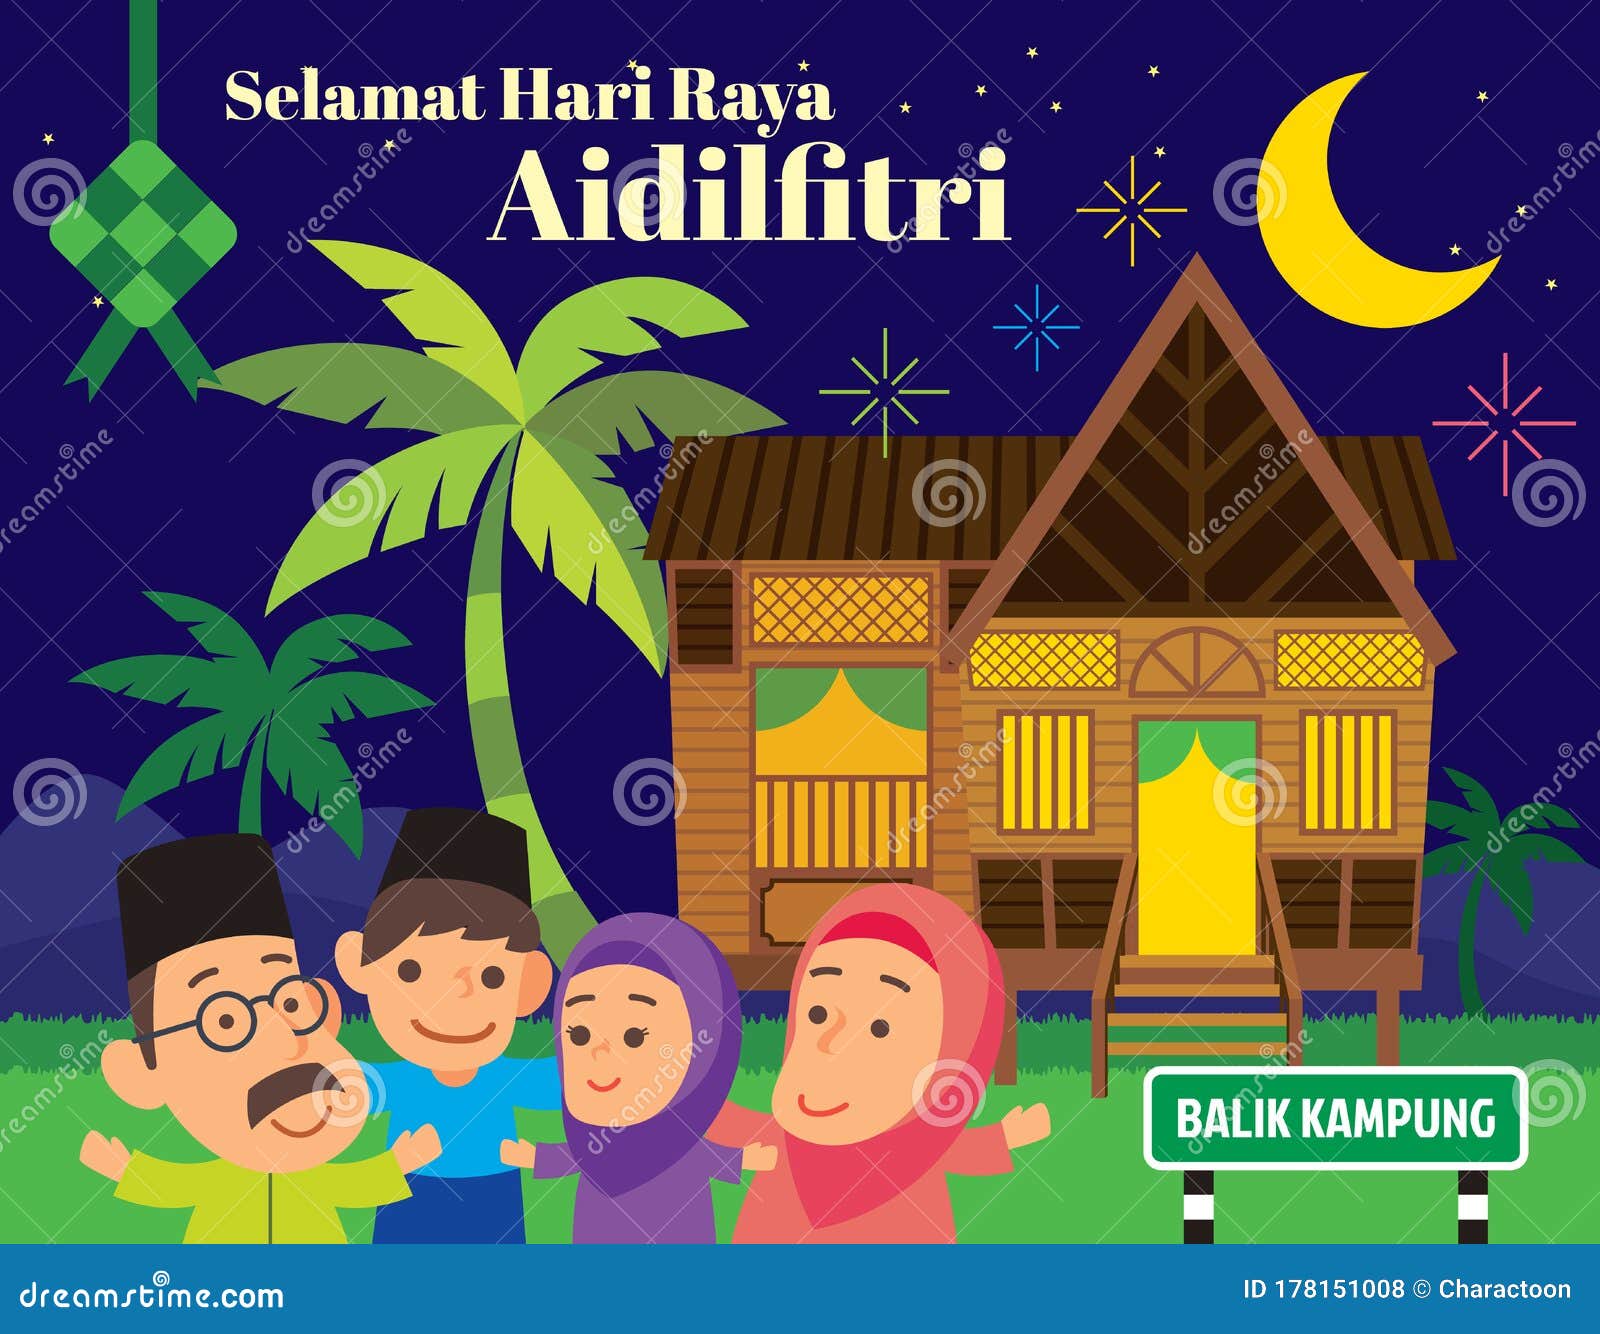 selamat hari raya aidilfitri. cartoon muslim family celebrating muslim festival at traditional malay village house